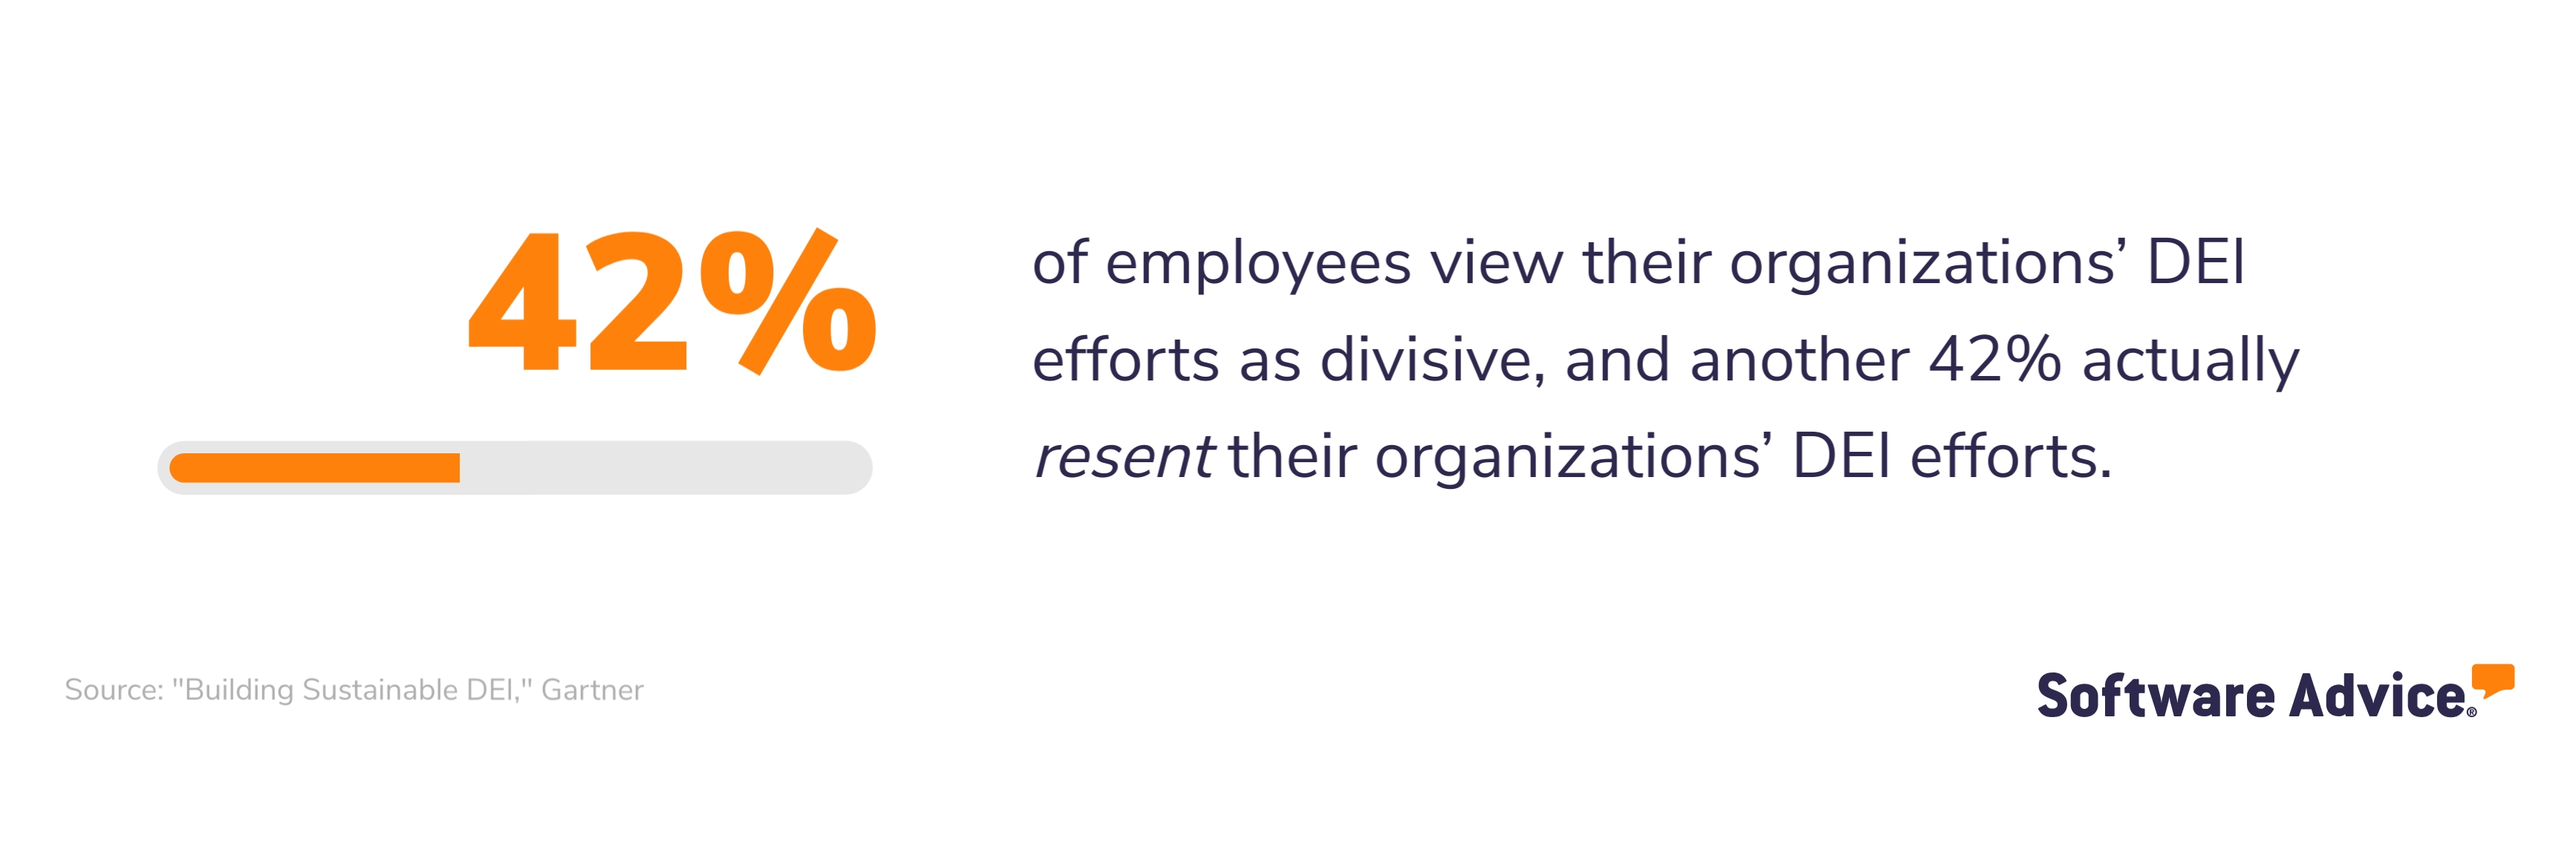 42% of employees resent their organization's DEI efforts